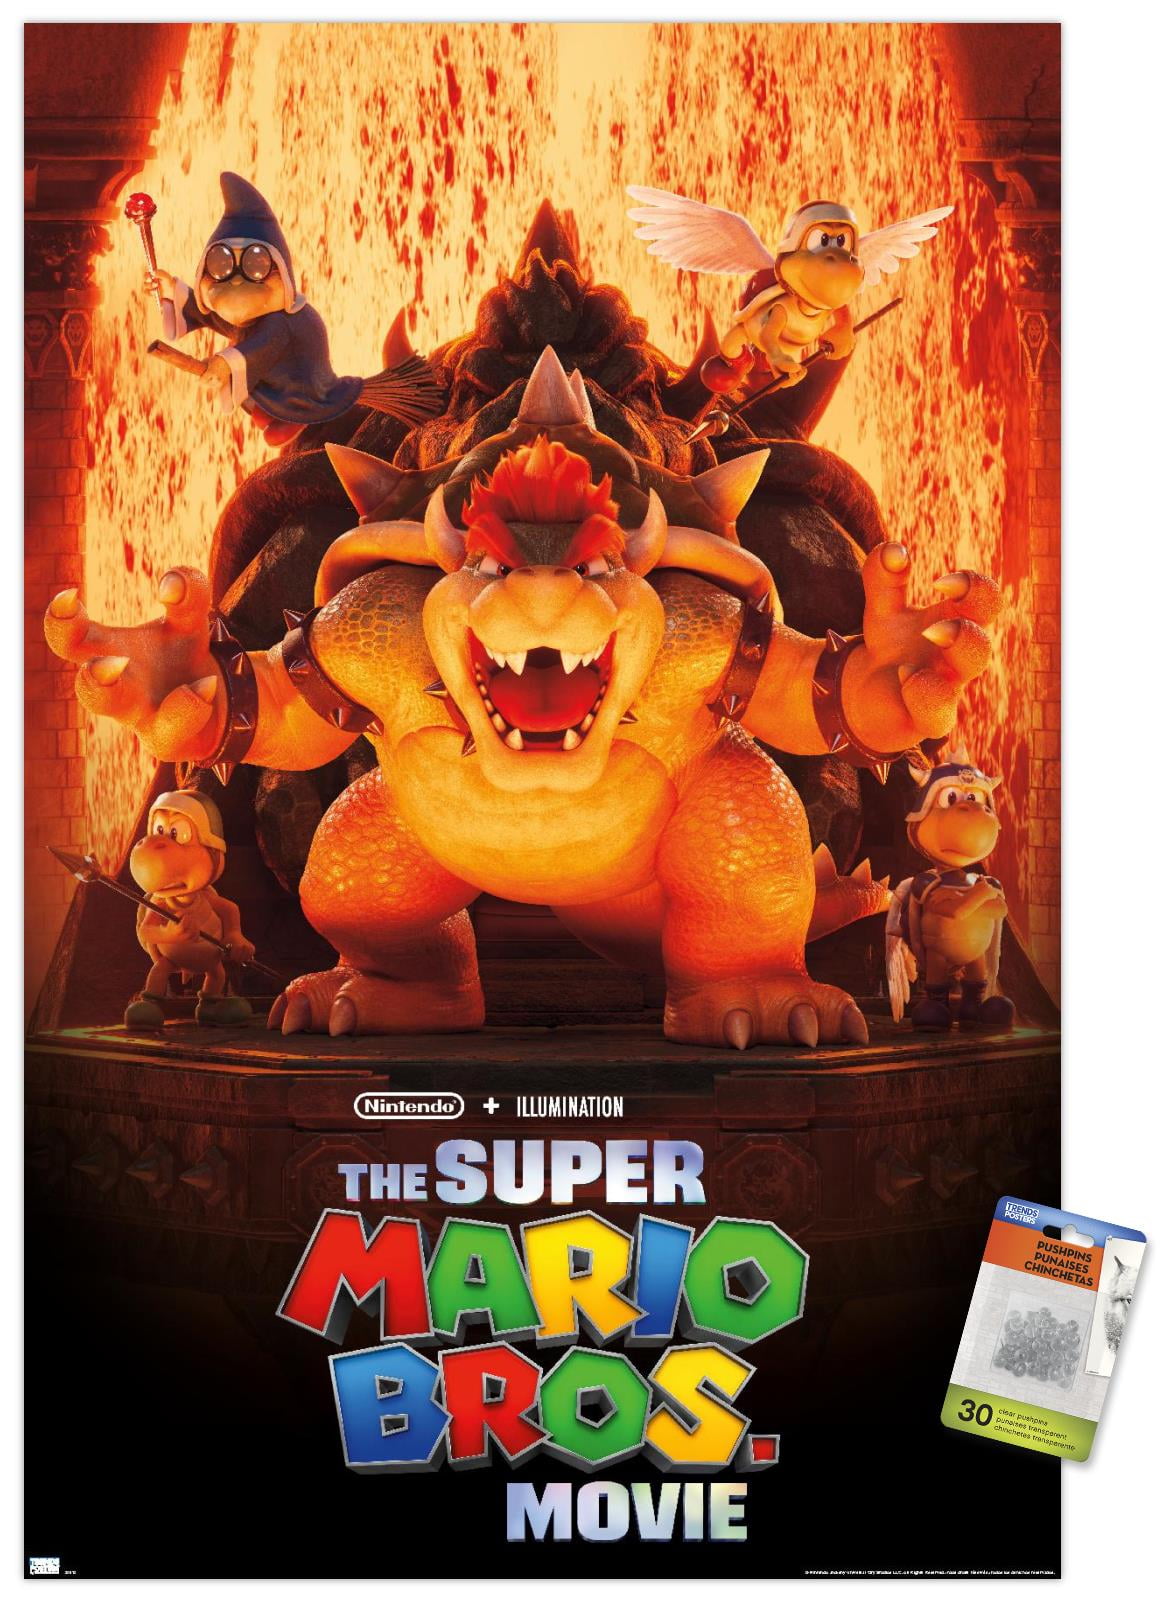 The Super Mario Bros. Movie - Bowser's World Key Art Wall Poster, 22.375 x  34 